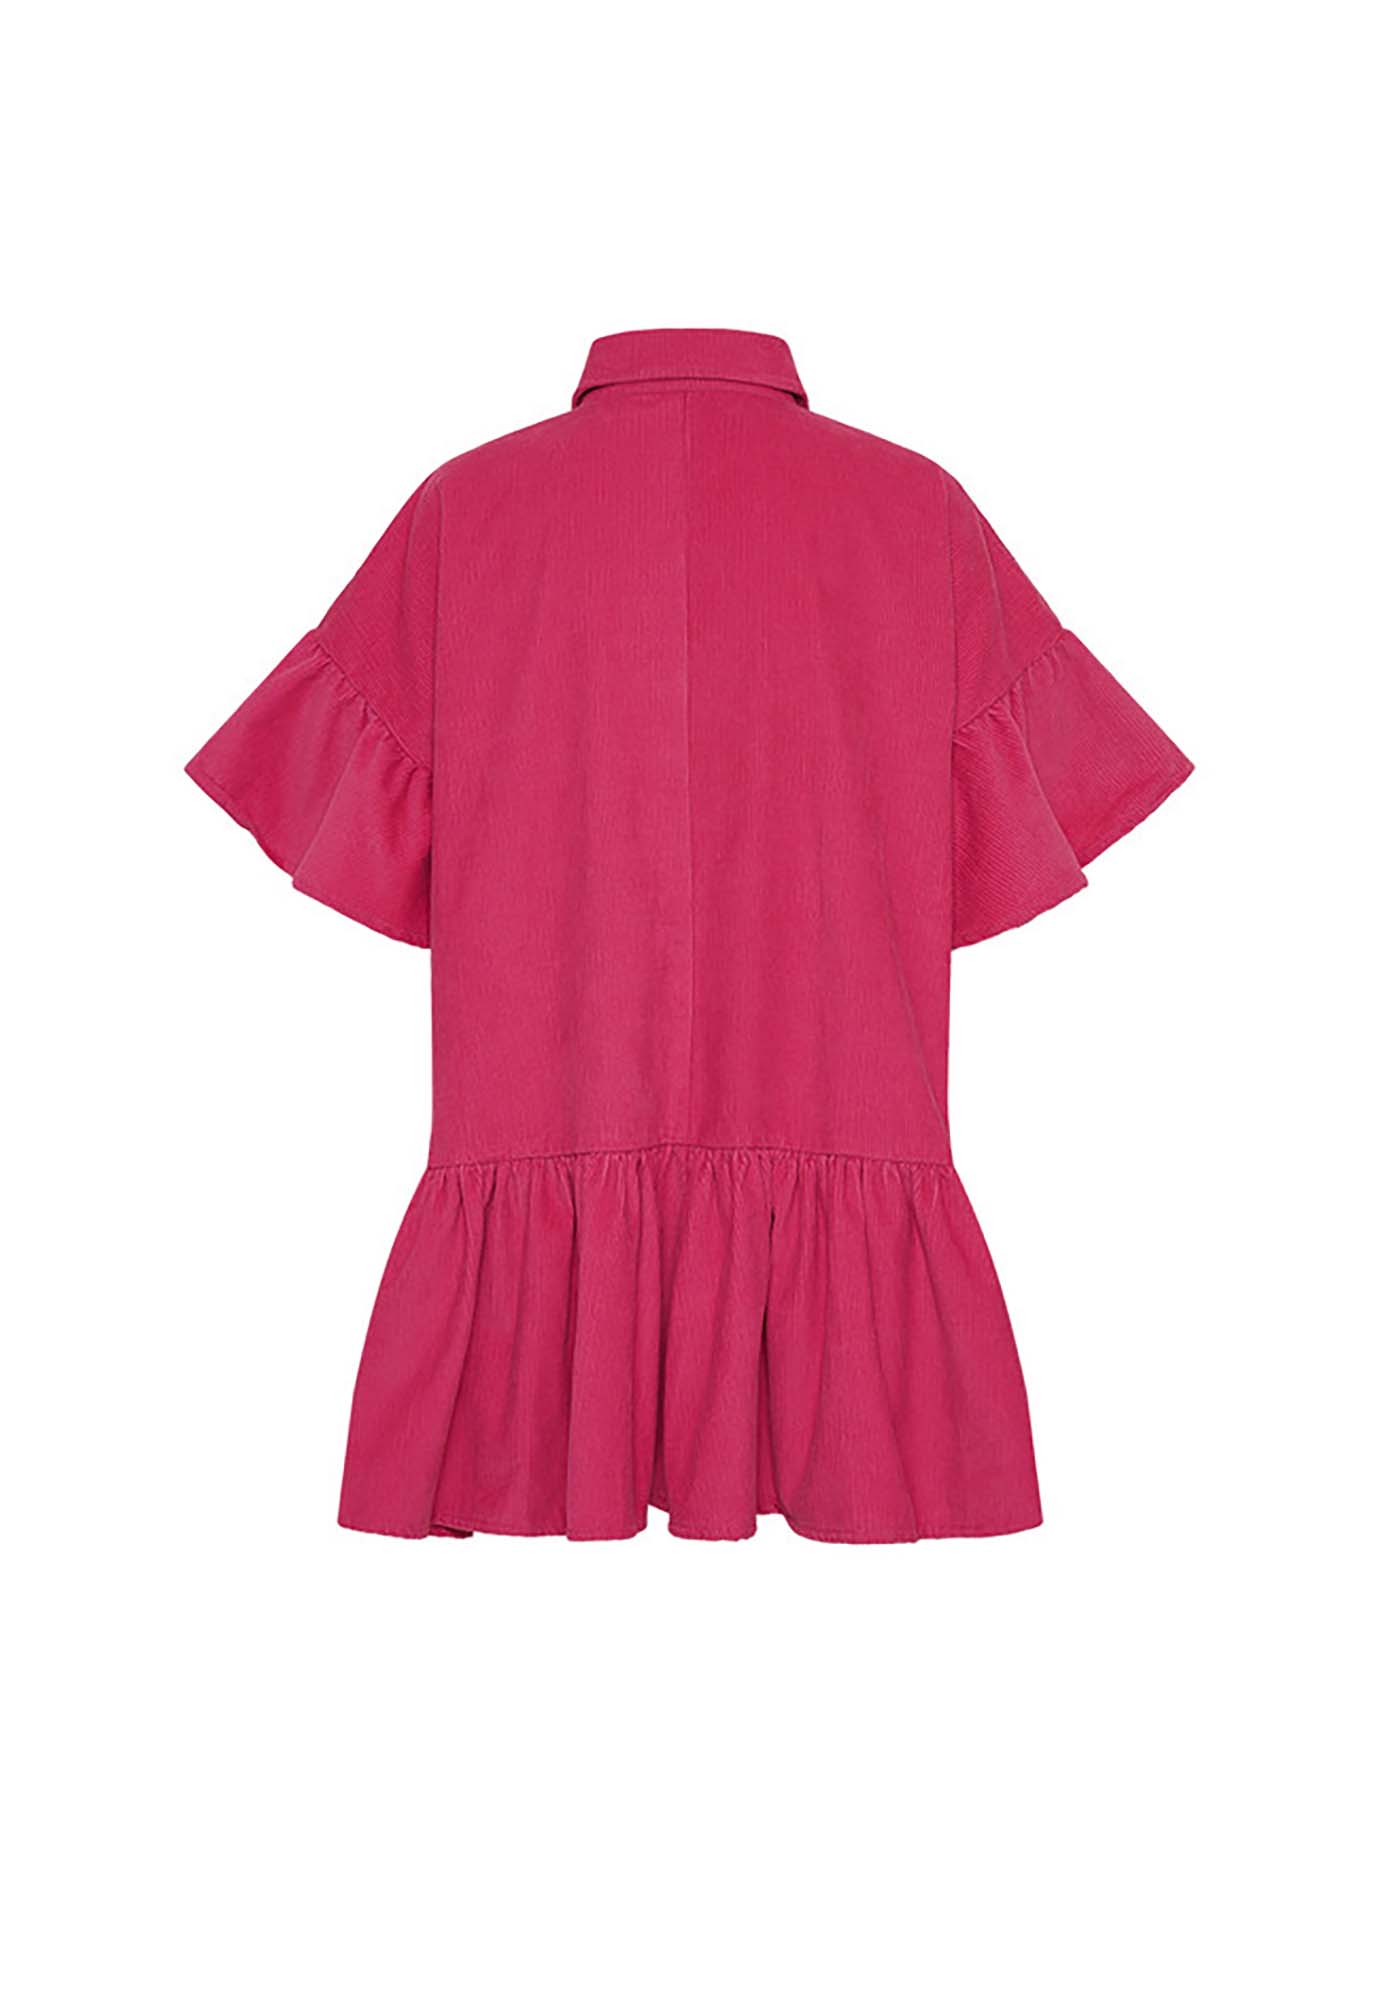 bohemian traders - genoa dress - pink